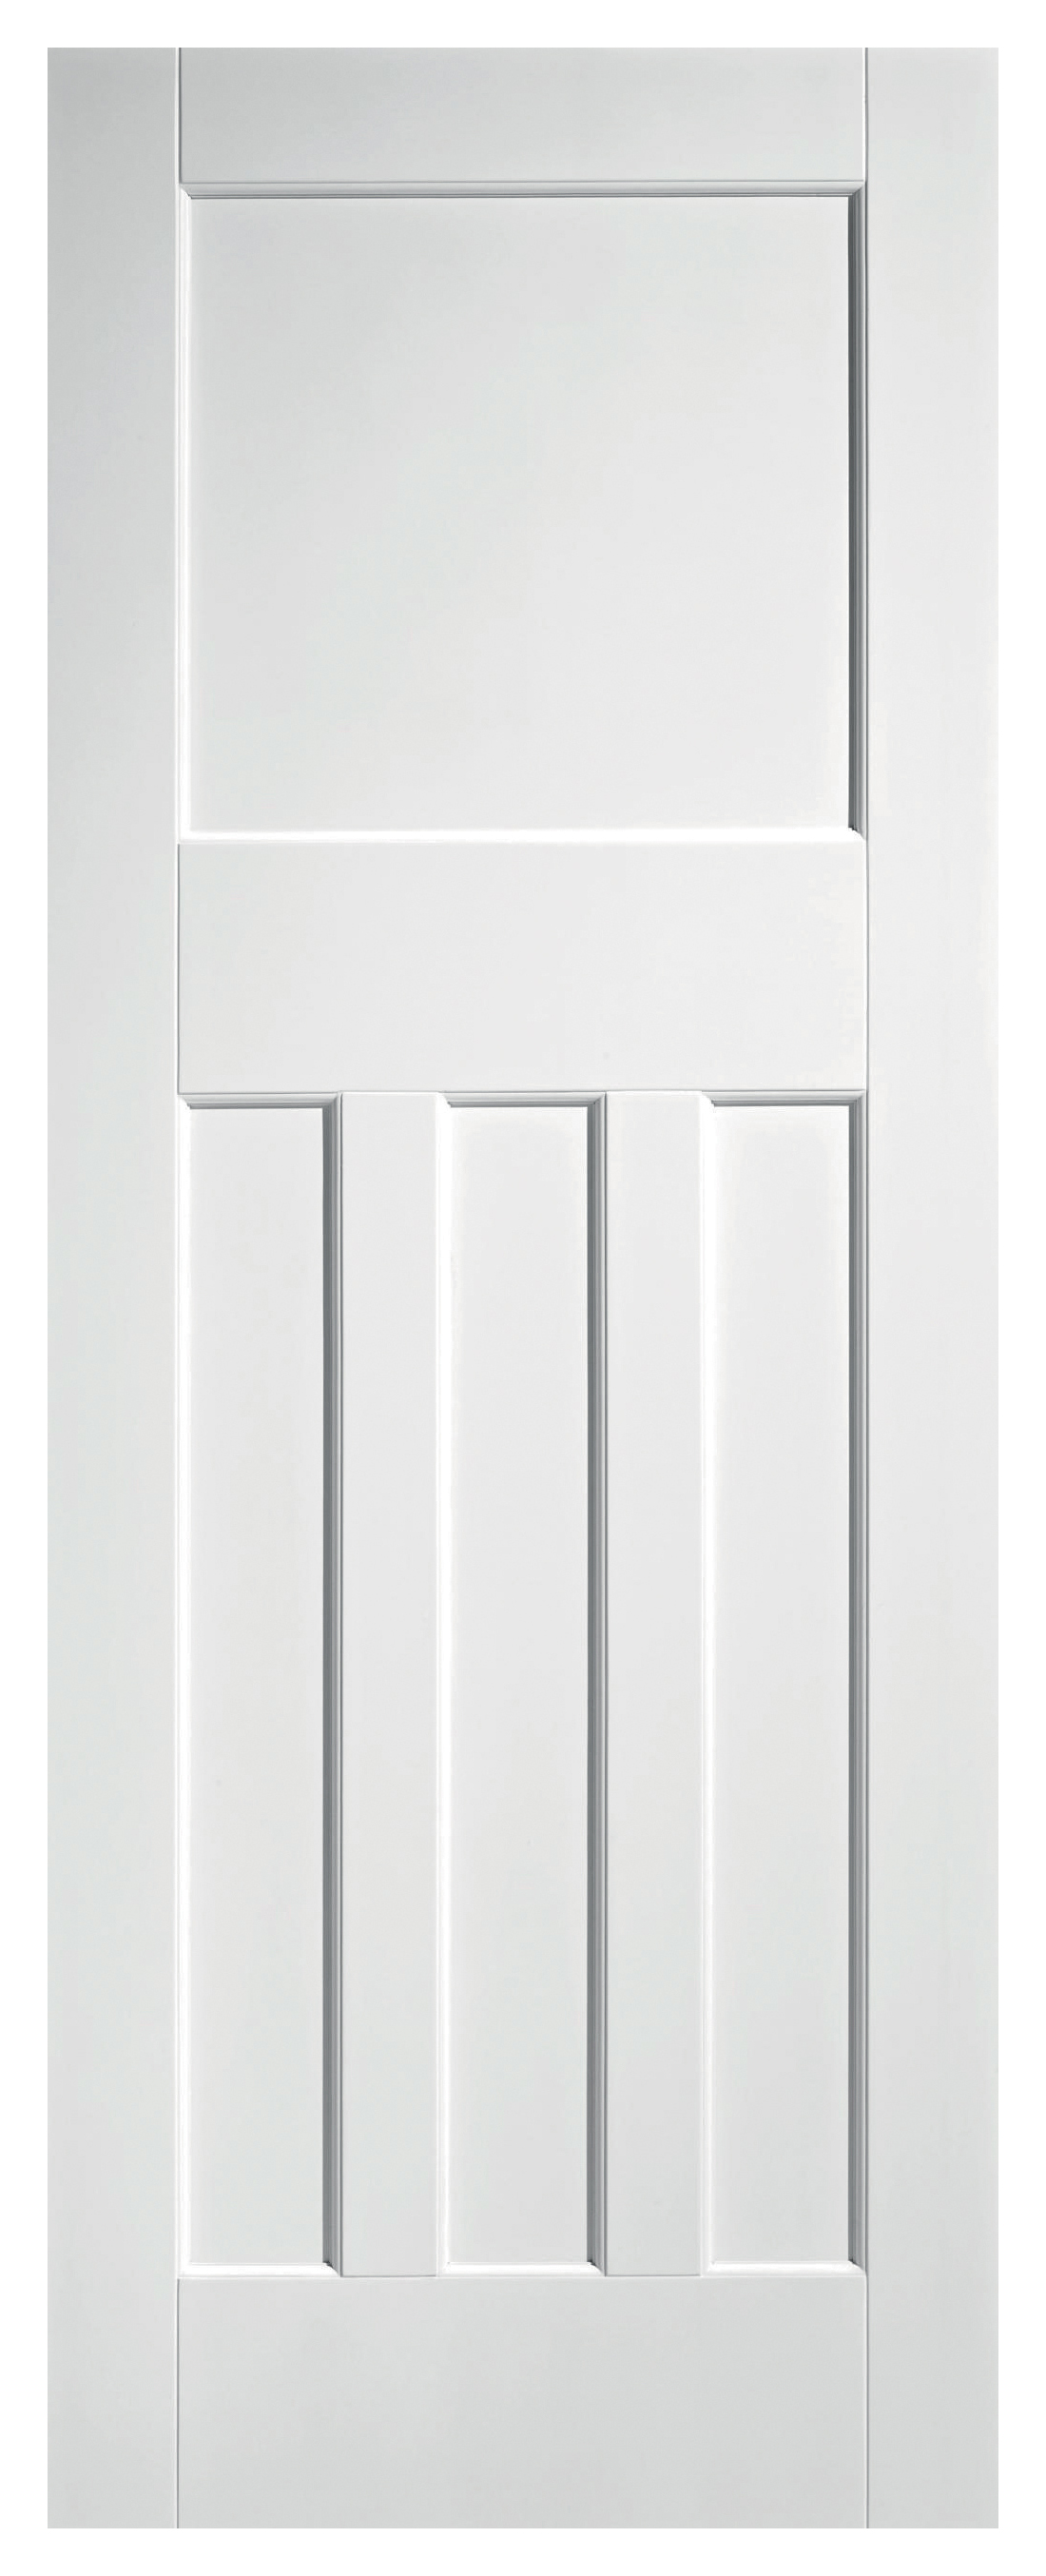 LPD Internal DX 30s Primed White FD30 Fire Door - 838 x 1981mm